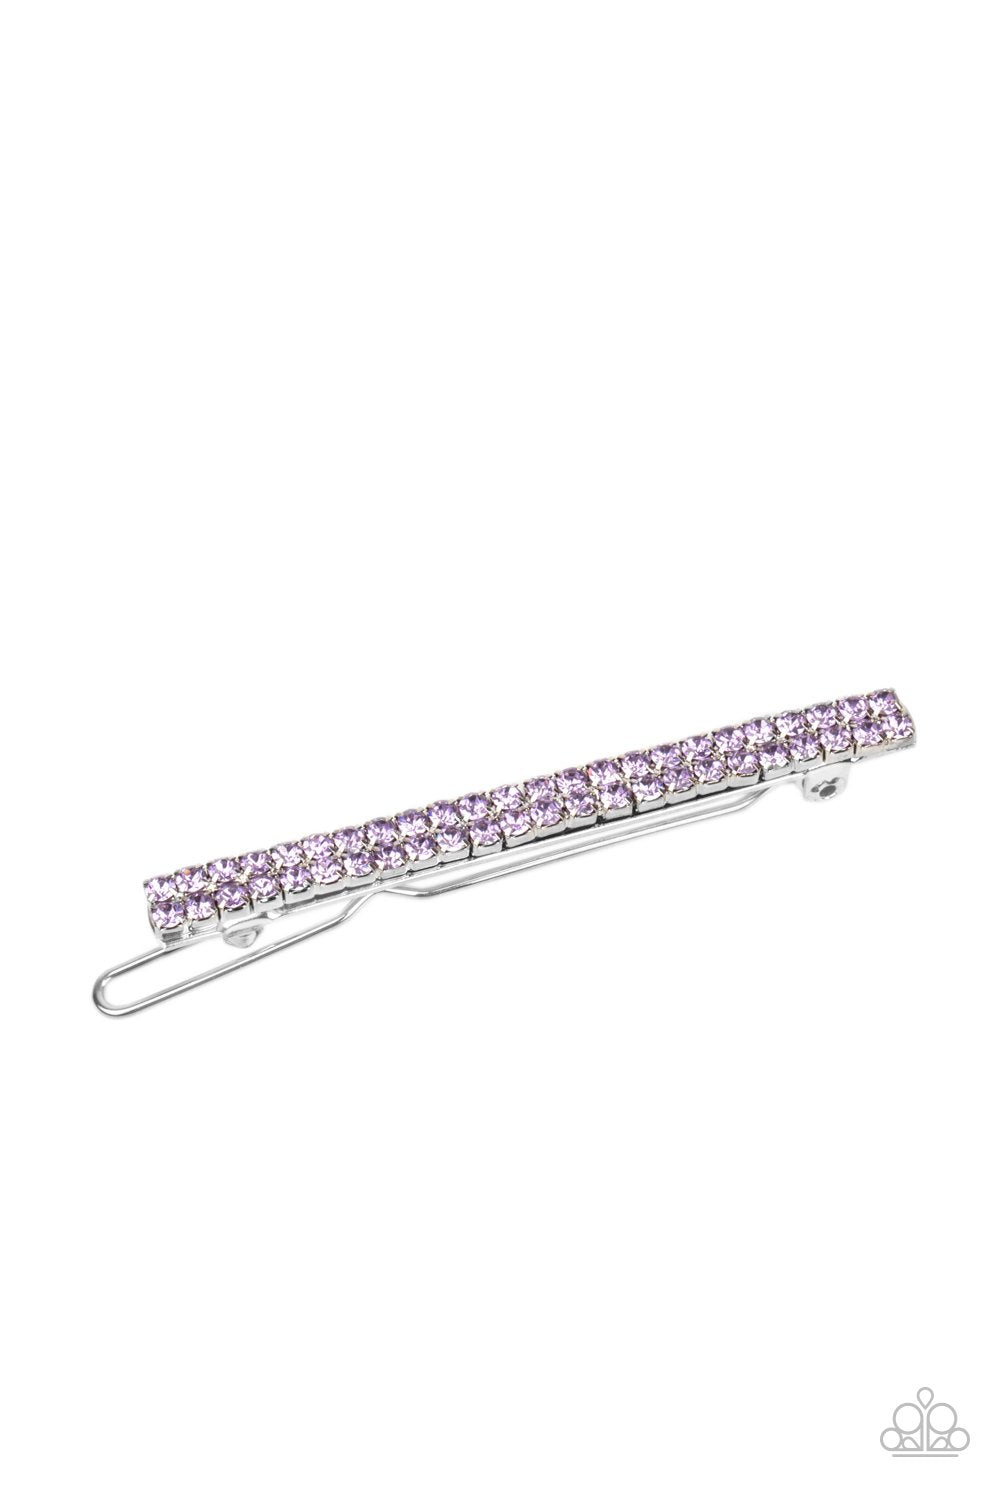 Thats GLOW-biz Purple Rhinestone Hair Clip - Paparazzi Accessories- model - CarasShop.com - $5 Jewelry by Cara Jewels